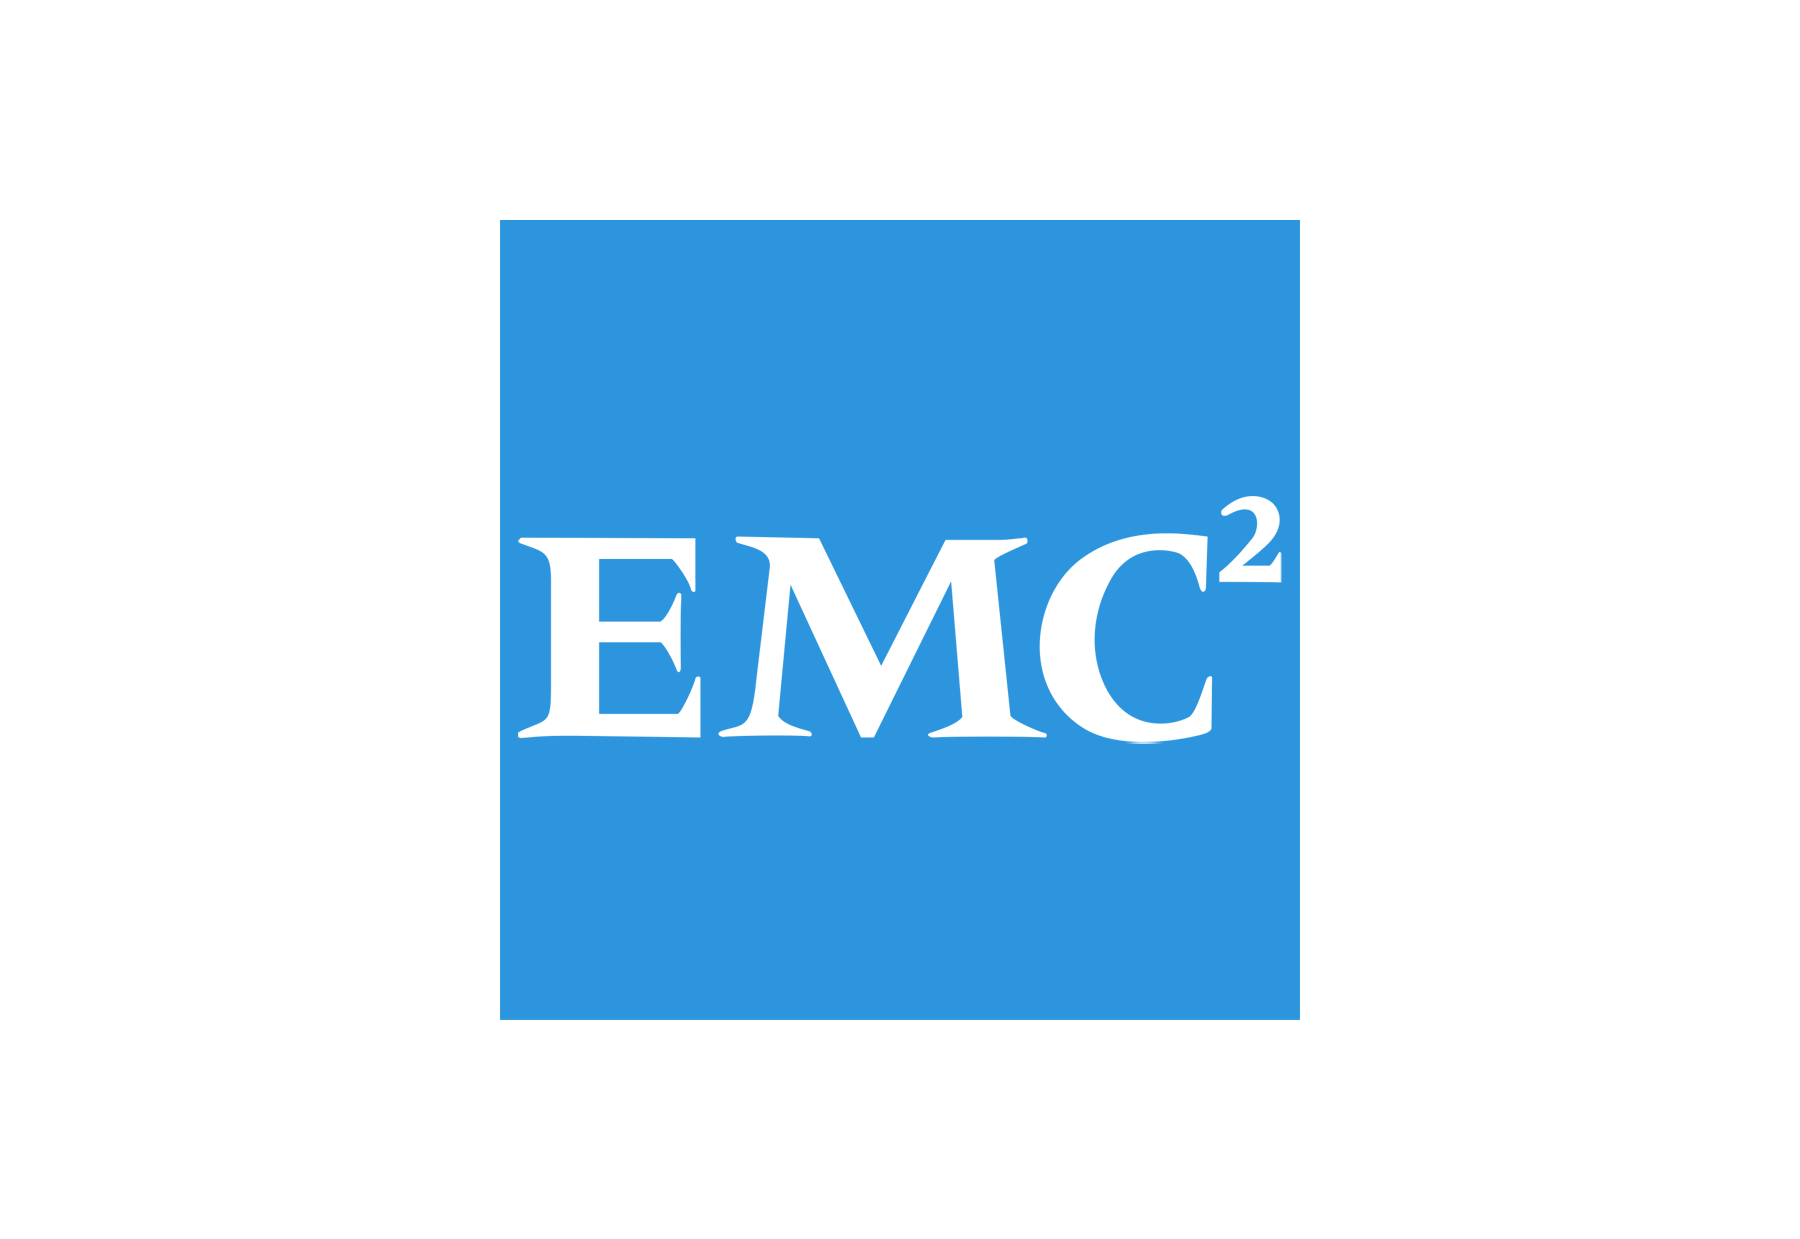 EMC Logo - EMC logo | Dwglogo